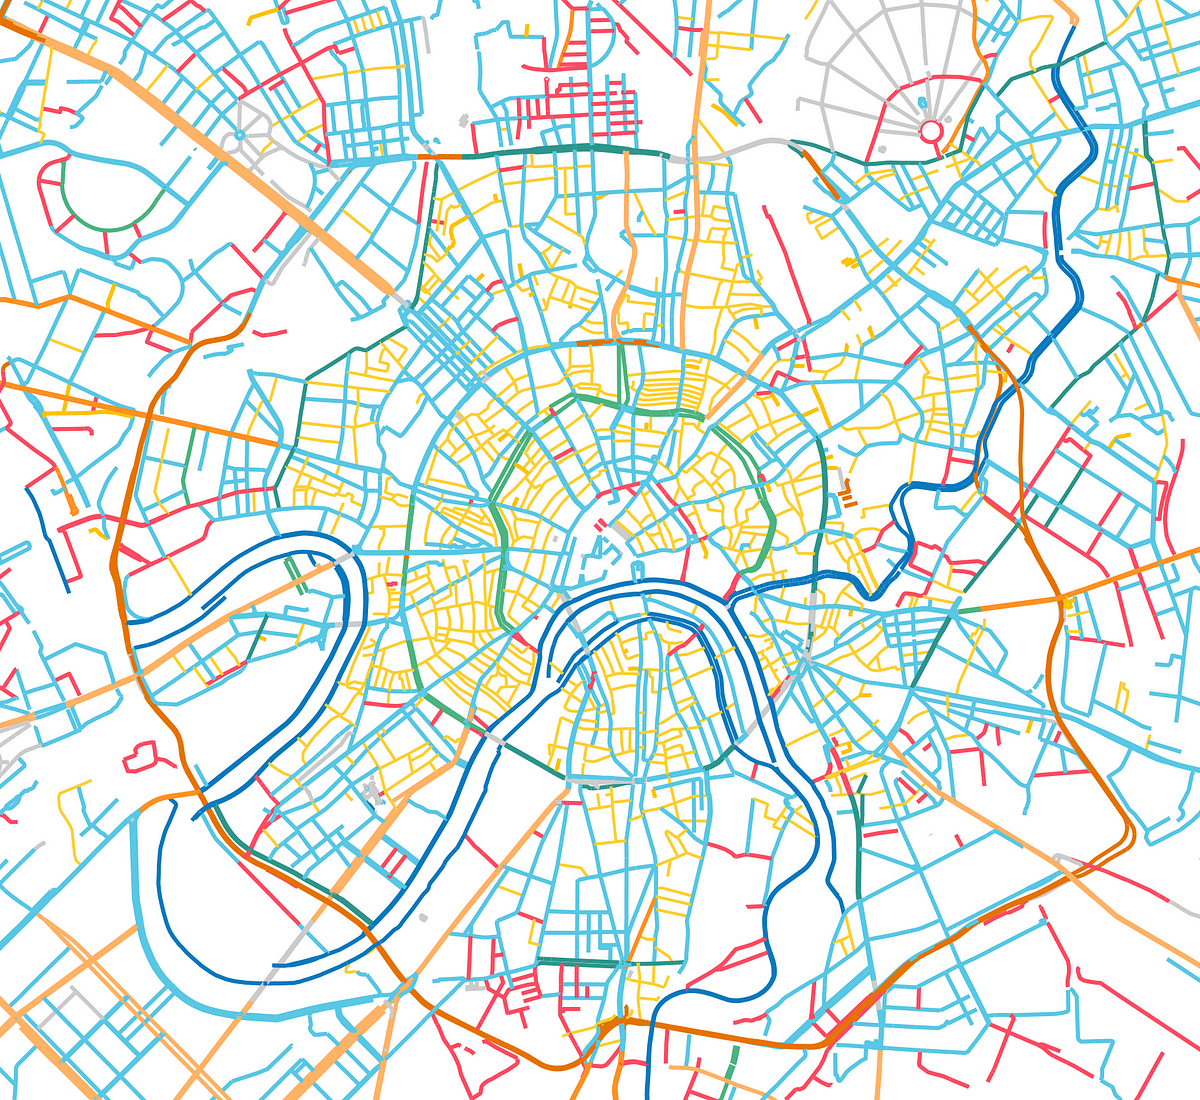 Creating a map of street designations with GeoPandas and Matplotlib